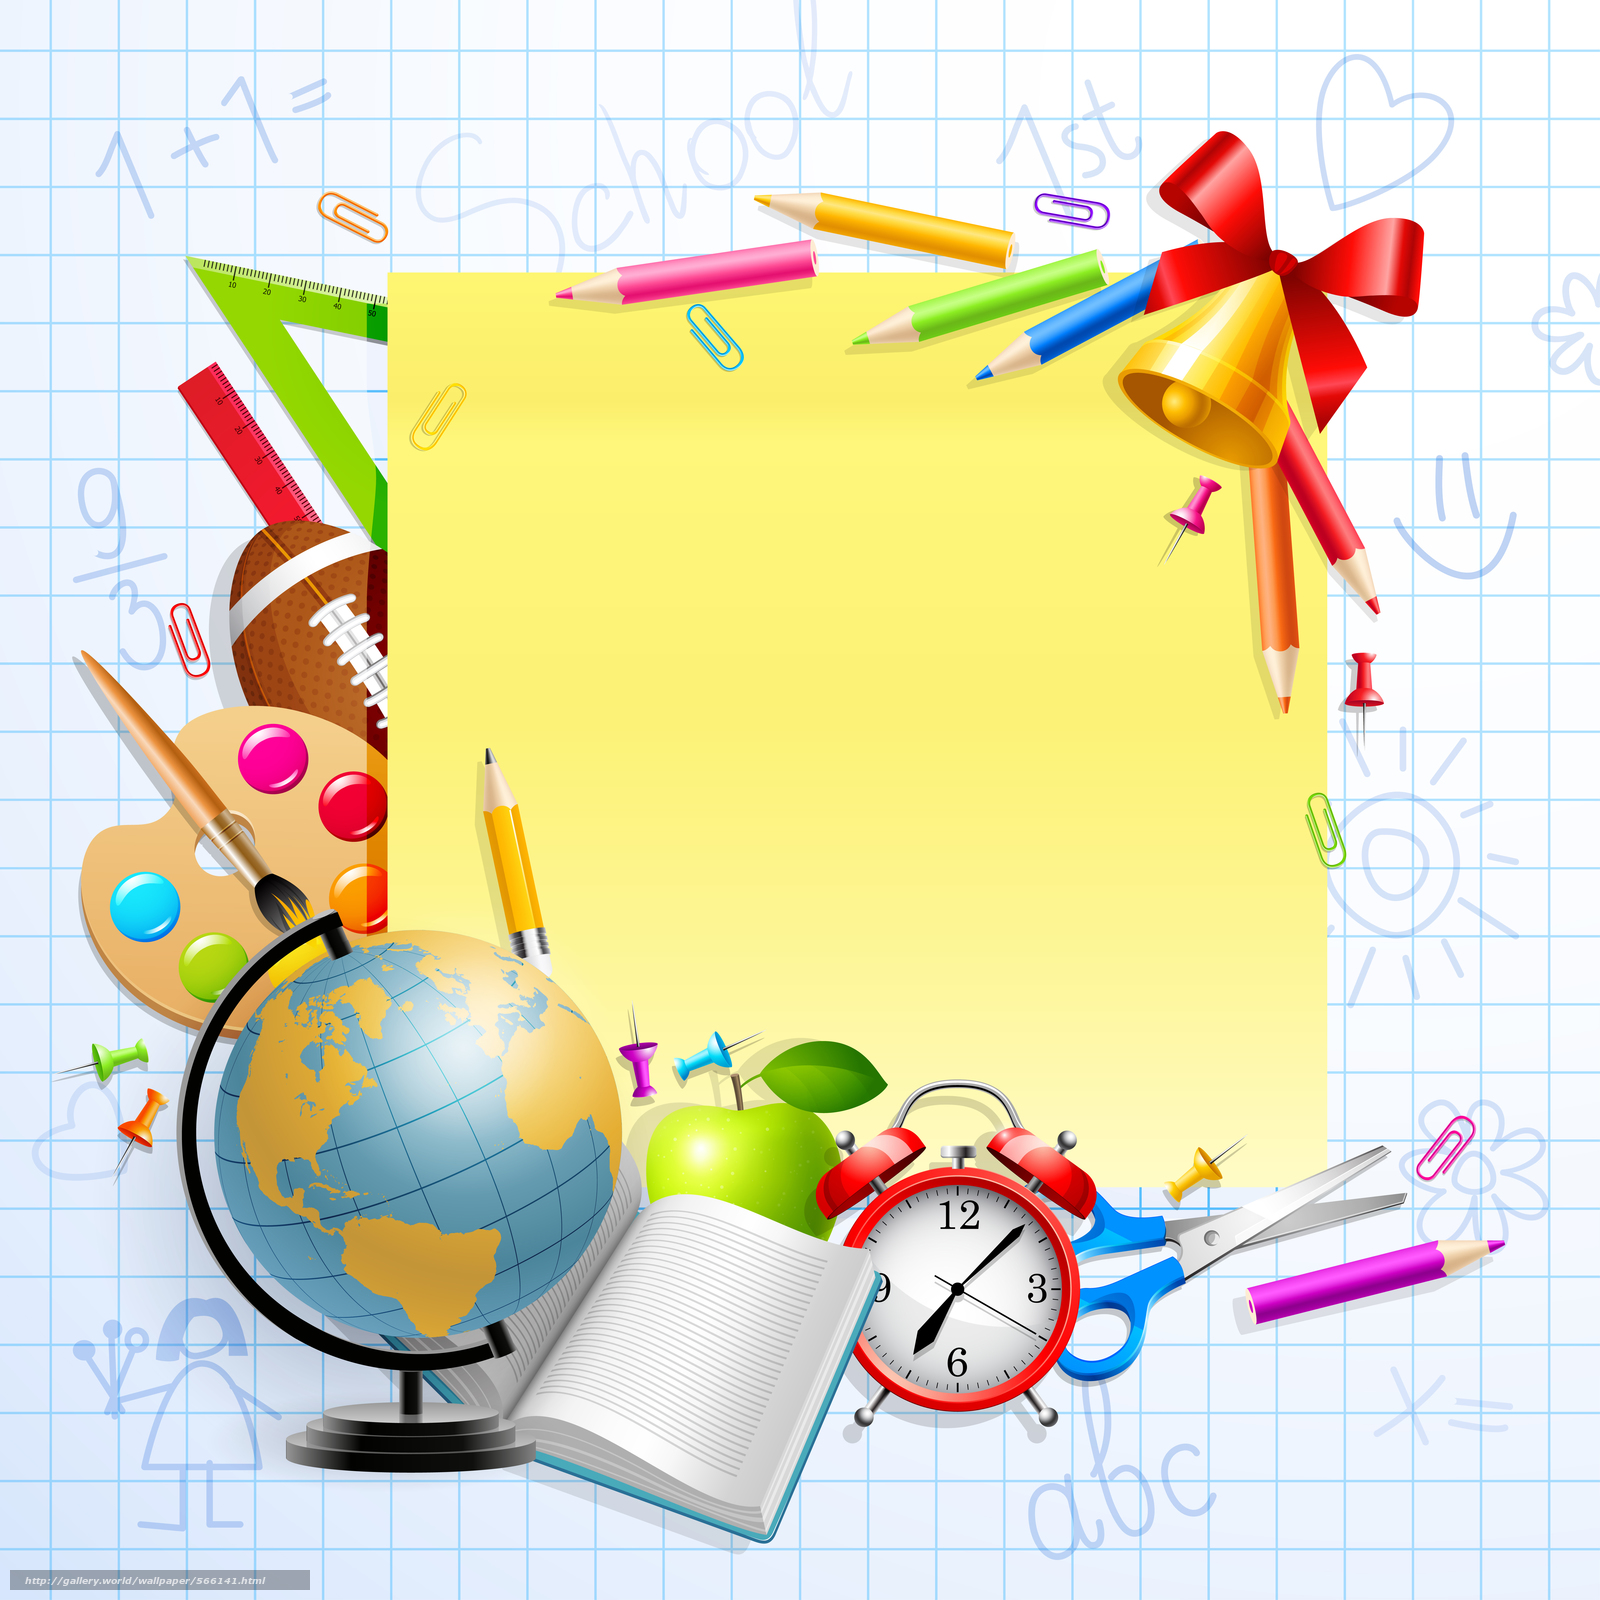 Download Wallpaper Stationery Schedule Back To School Background Design For Portfolio 1600x1600 Wallpaper Teahub Io